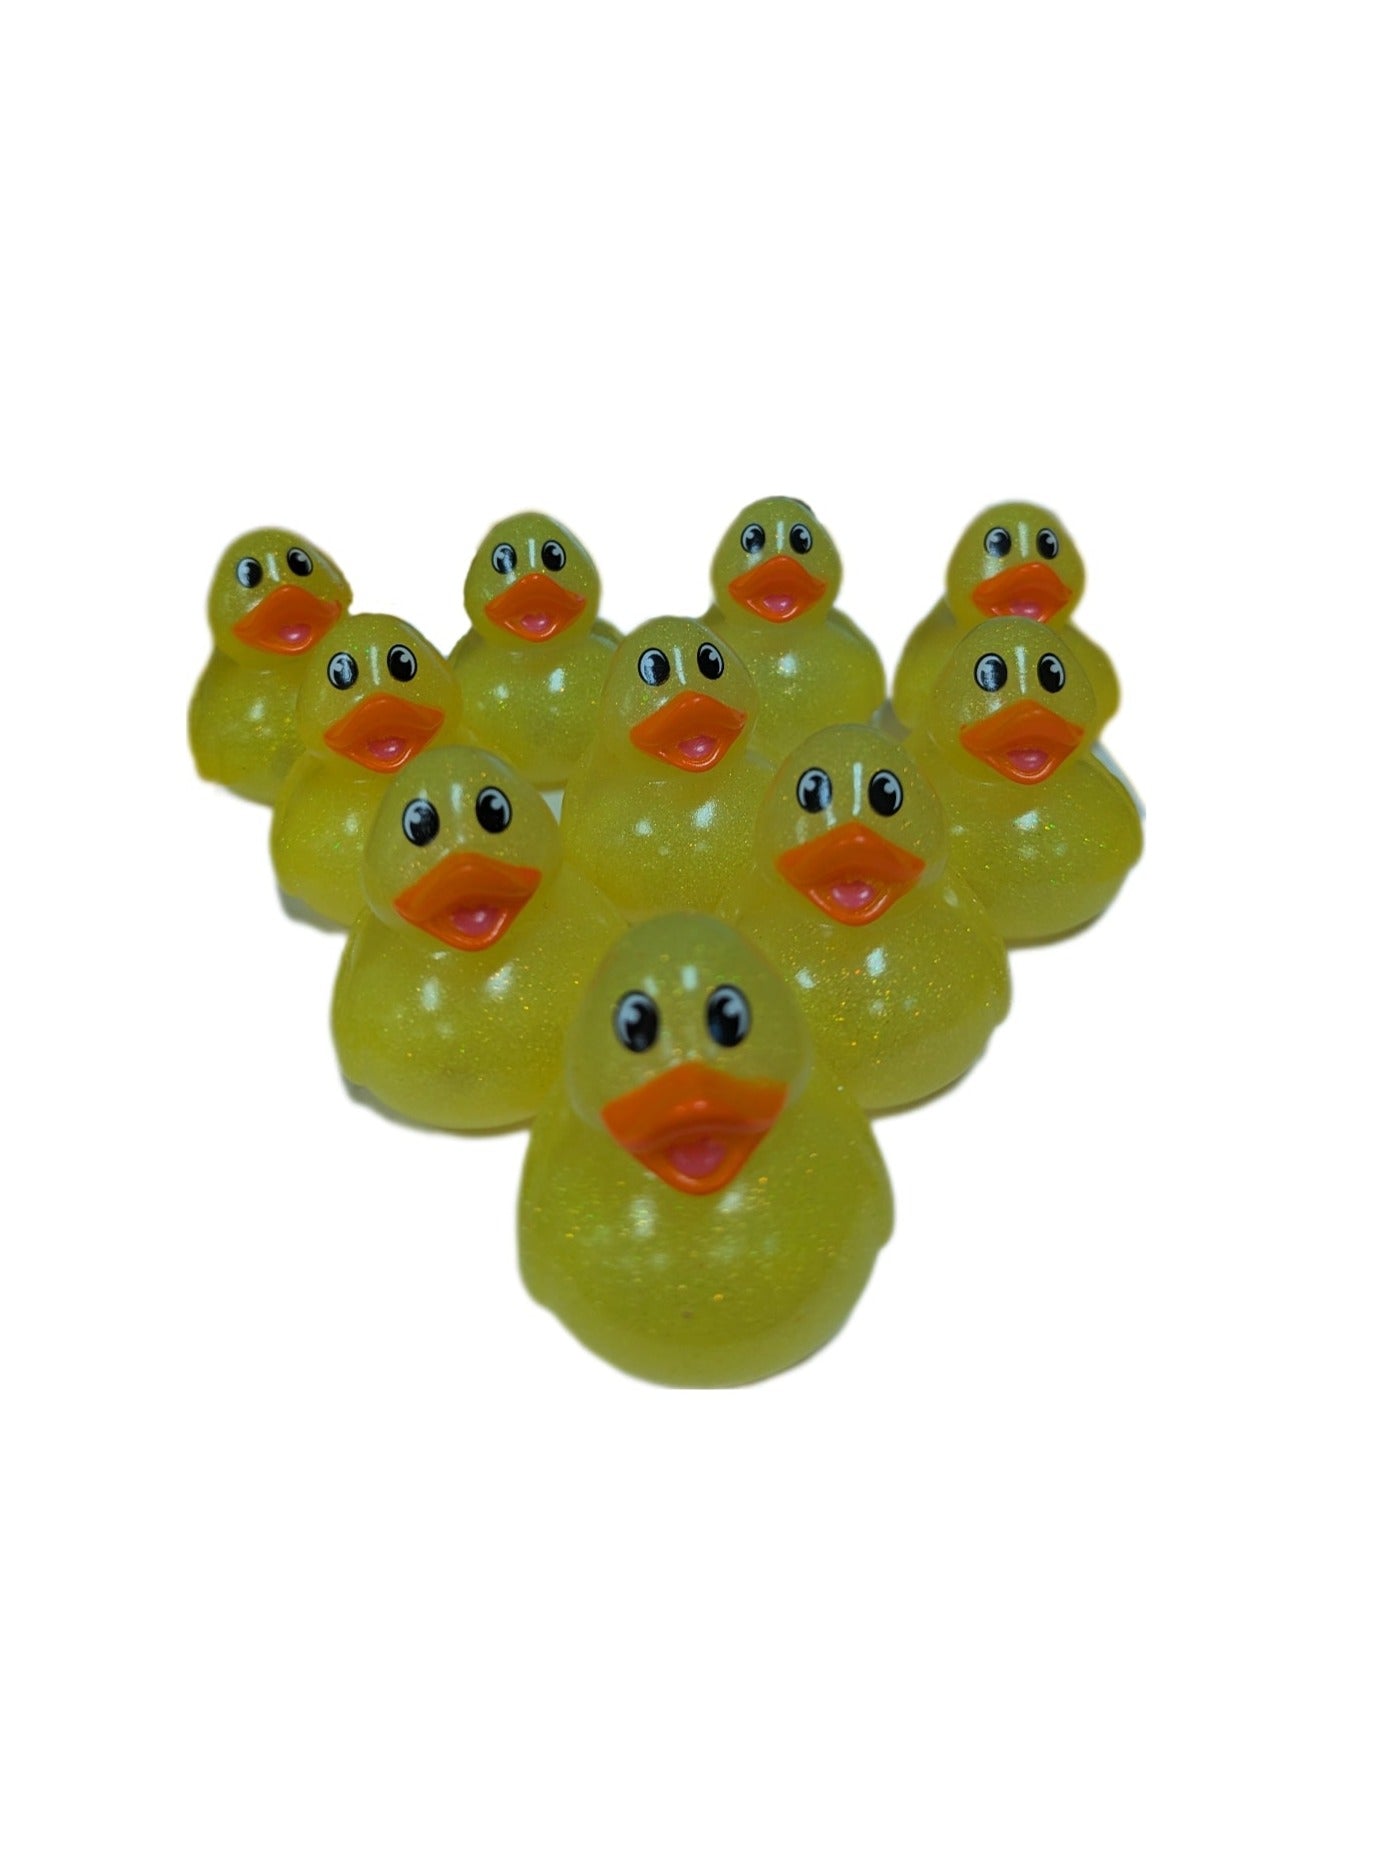 10 Yellow Glitter & Orange Beak Ducks - 2" Rubber Ducks